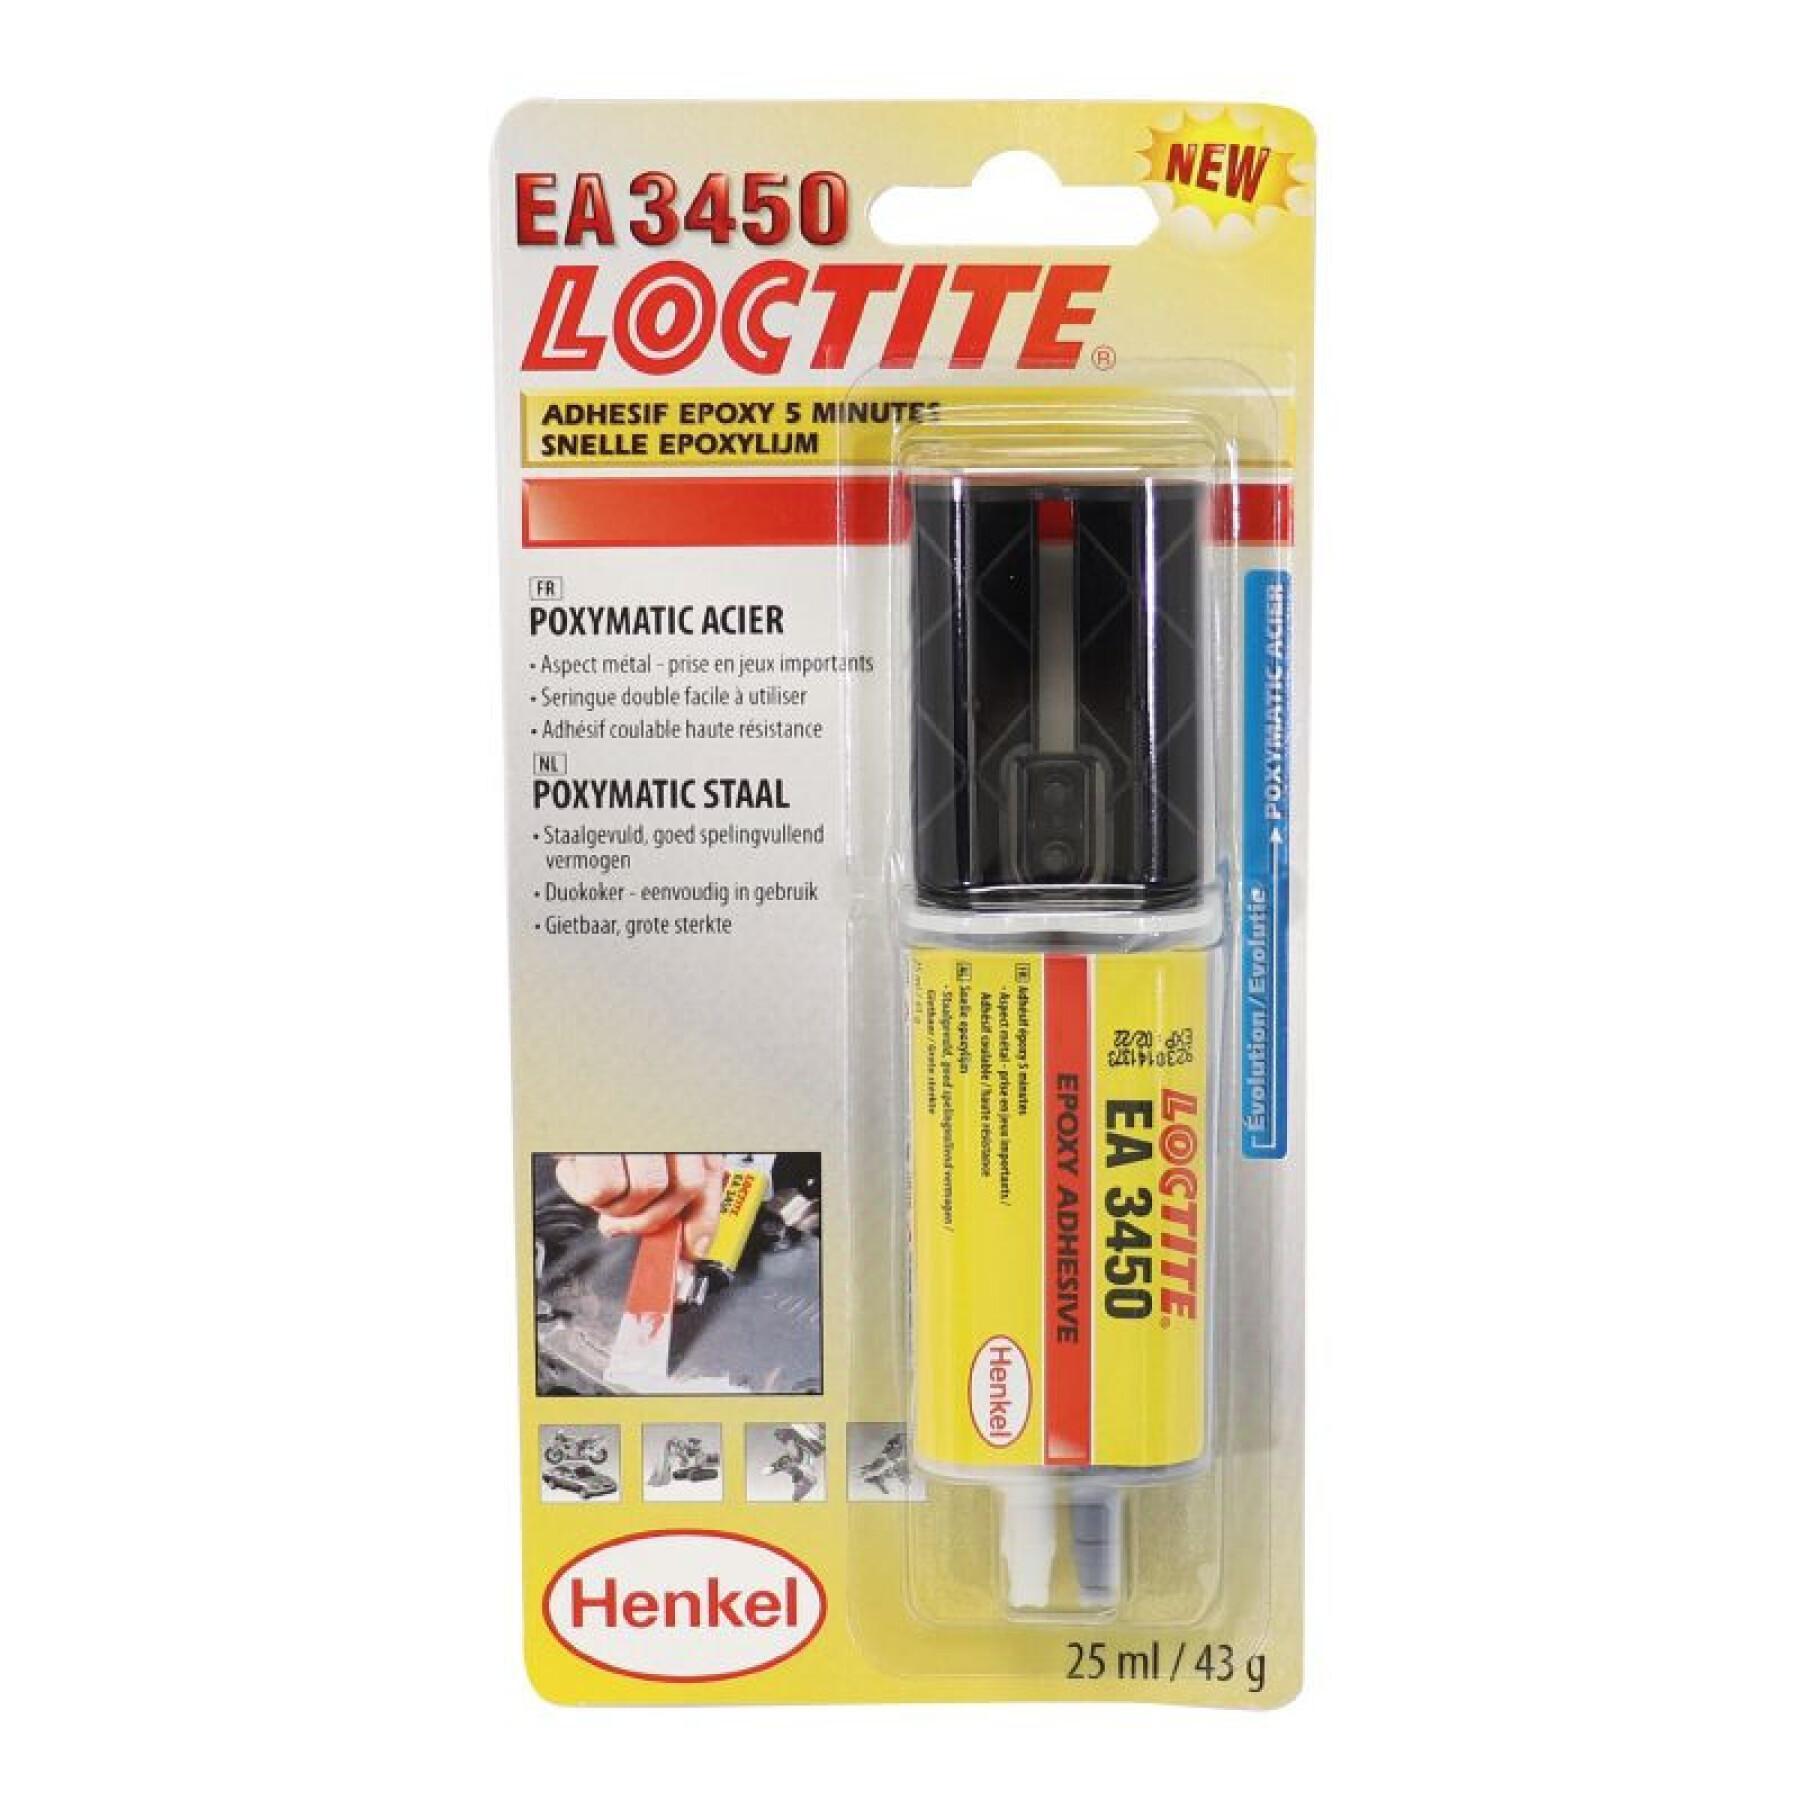 Glue Loctite EA 3450 Acier Epoxy